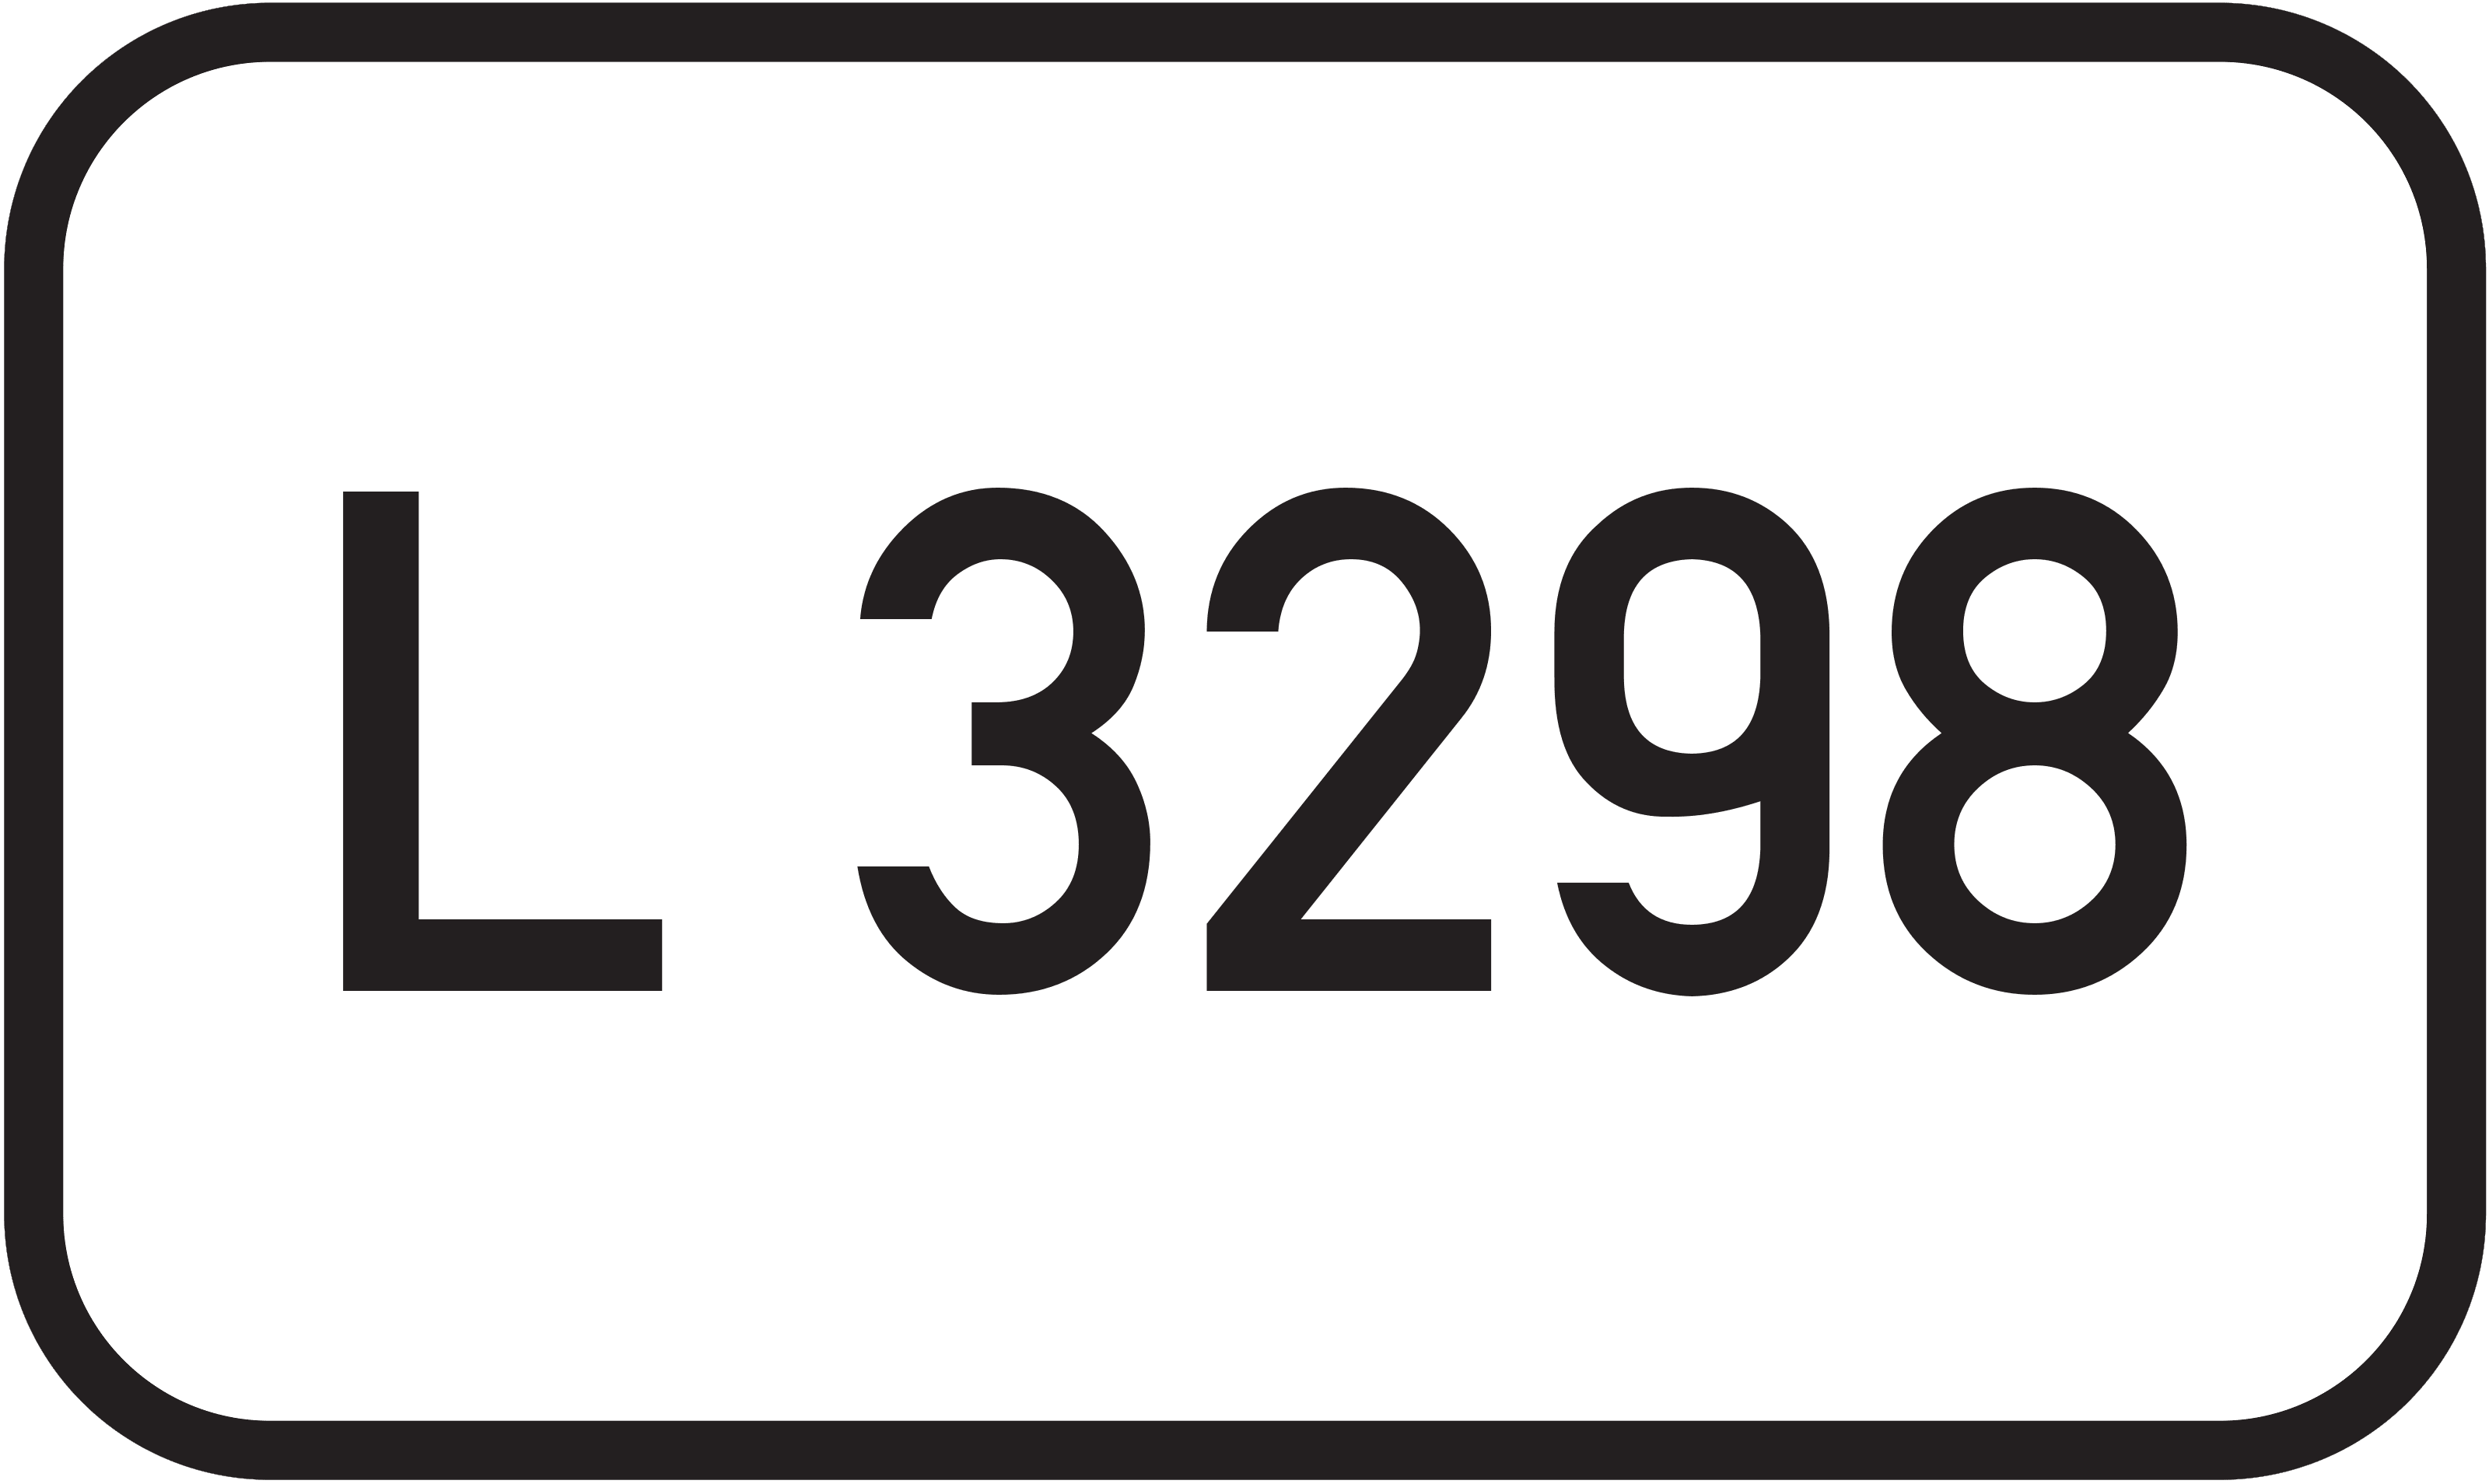 Straßenschild Landesstraße L 3298